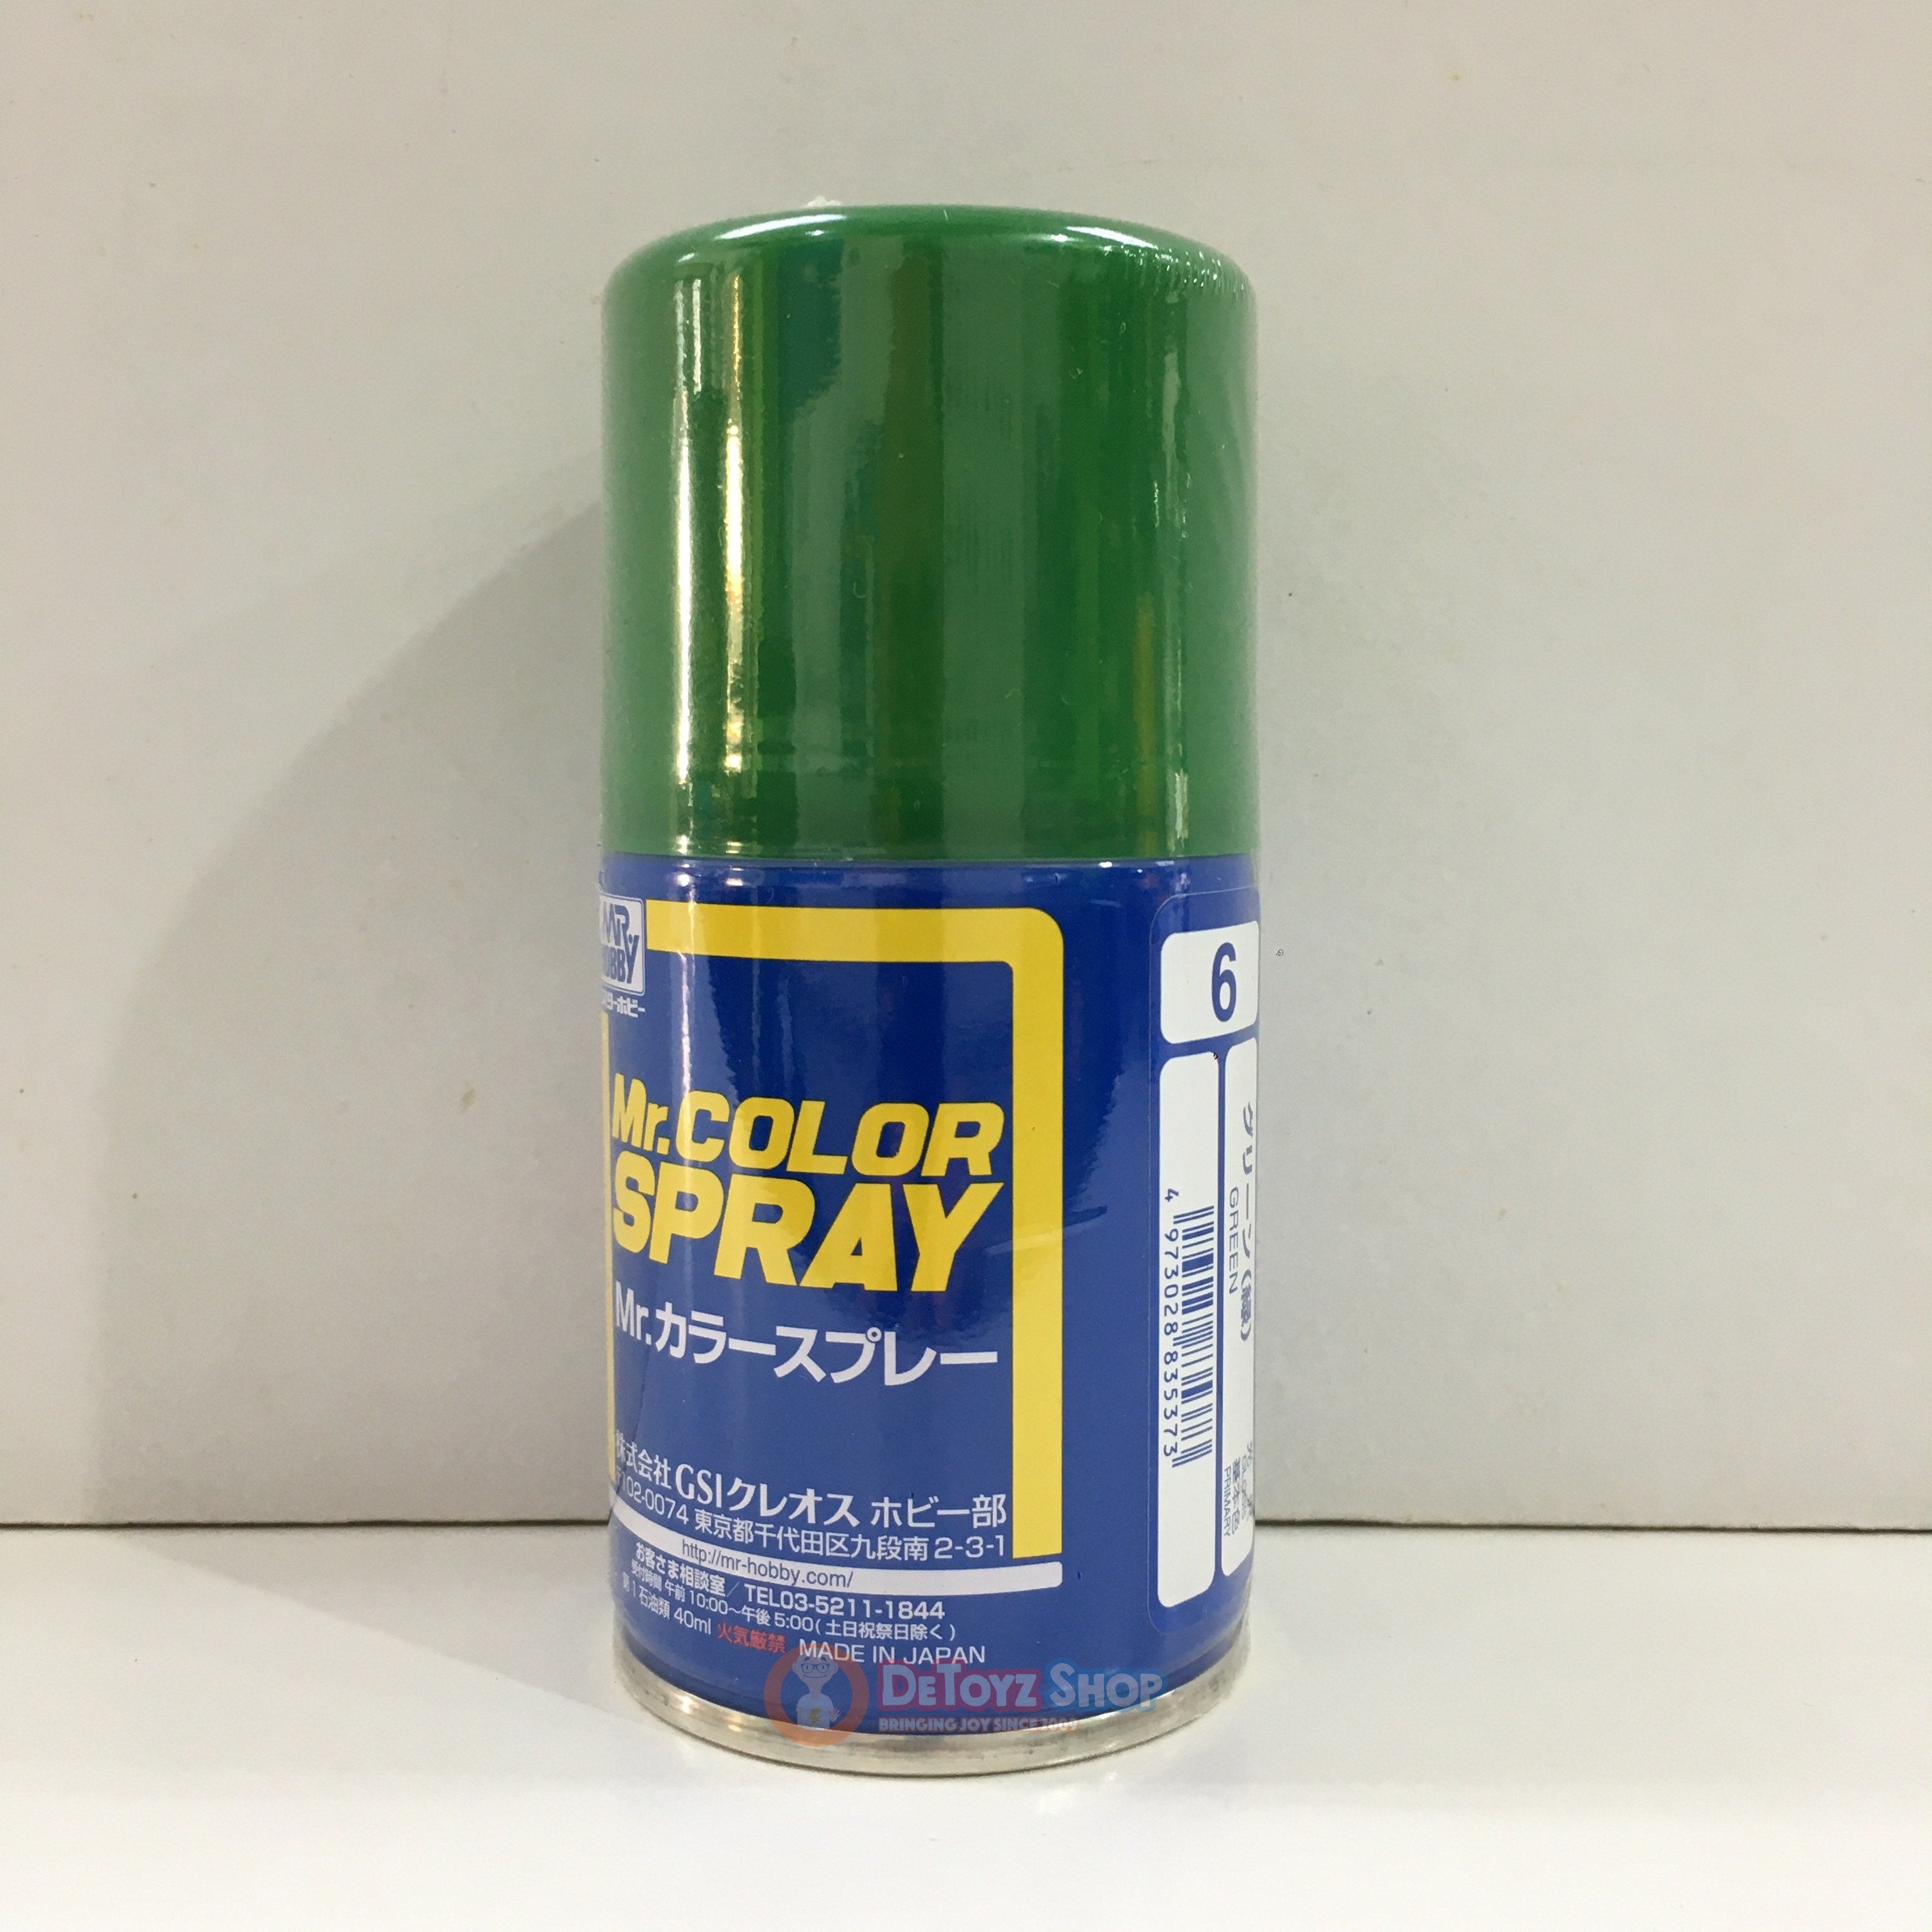 Mr Color Spray S-6 Green